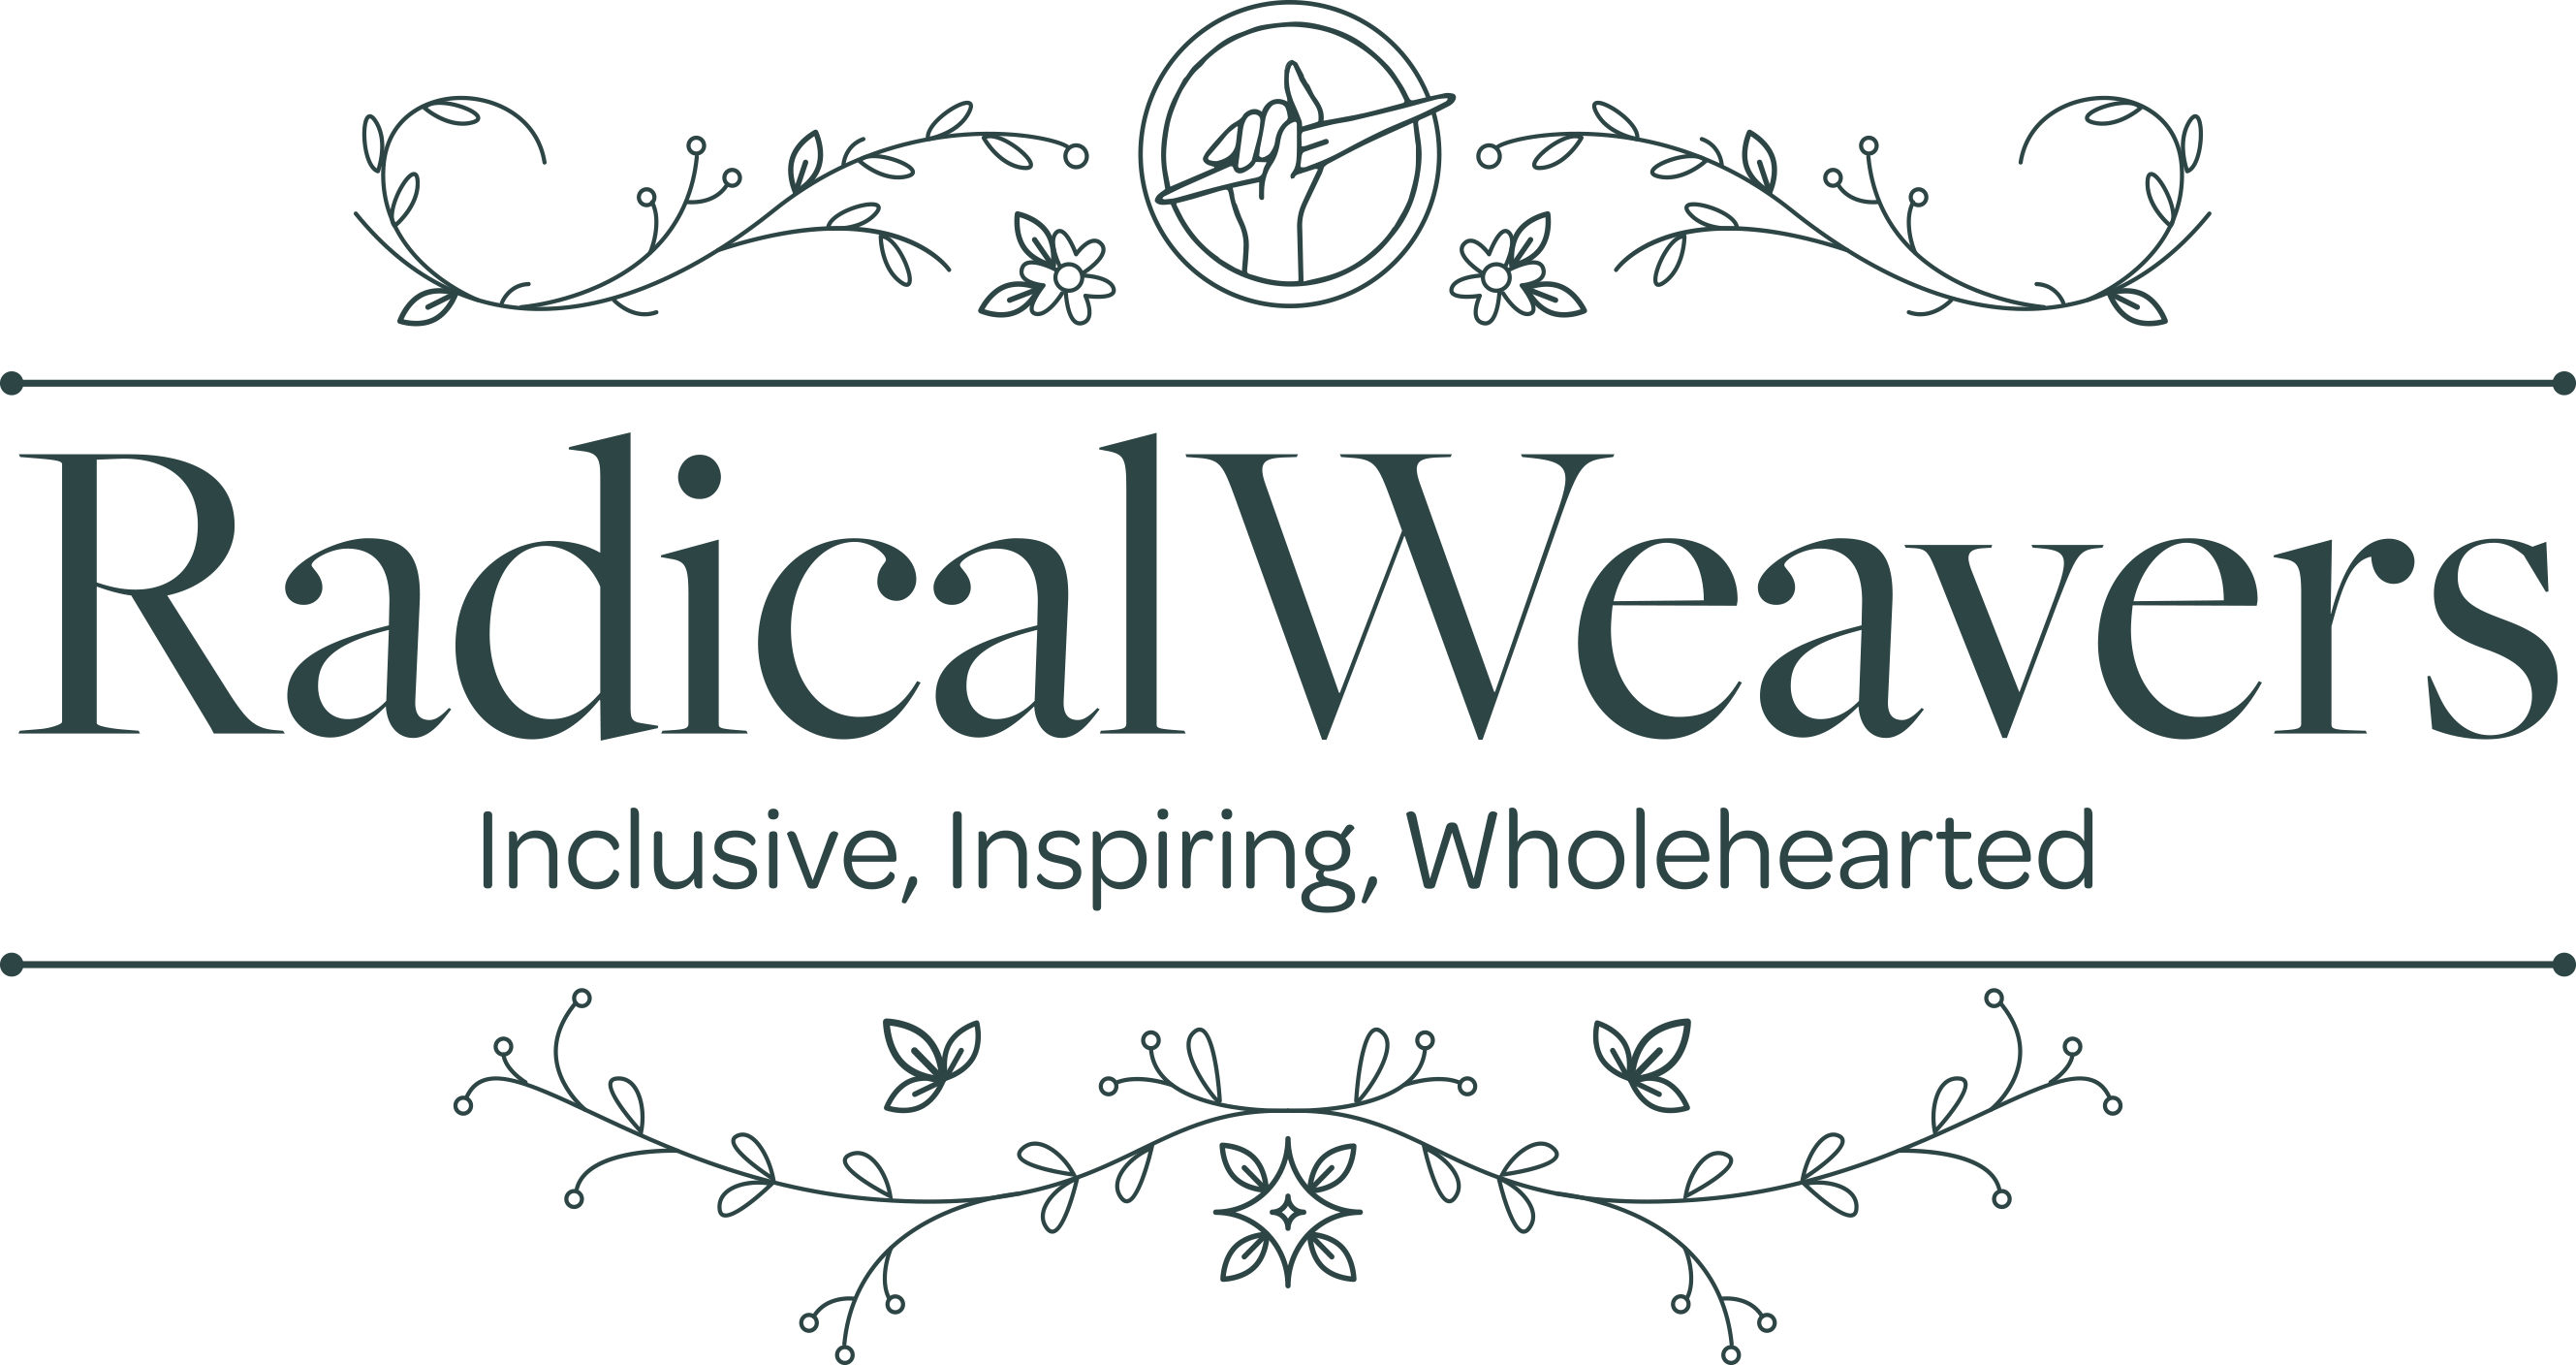 Radical Weavers